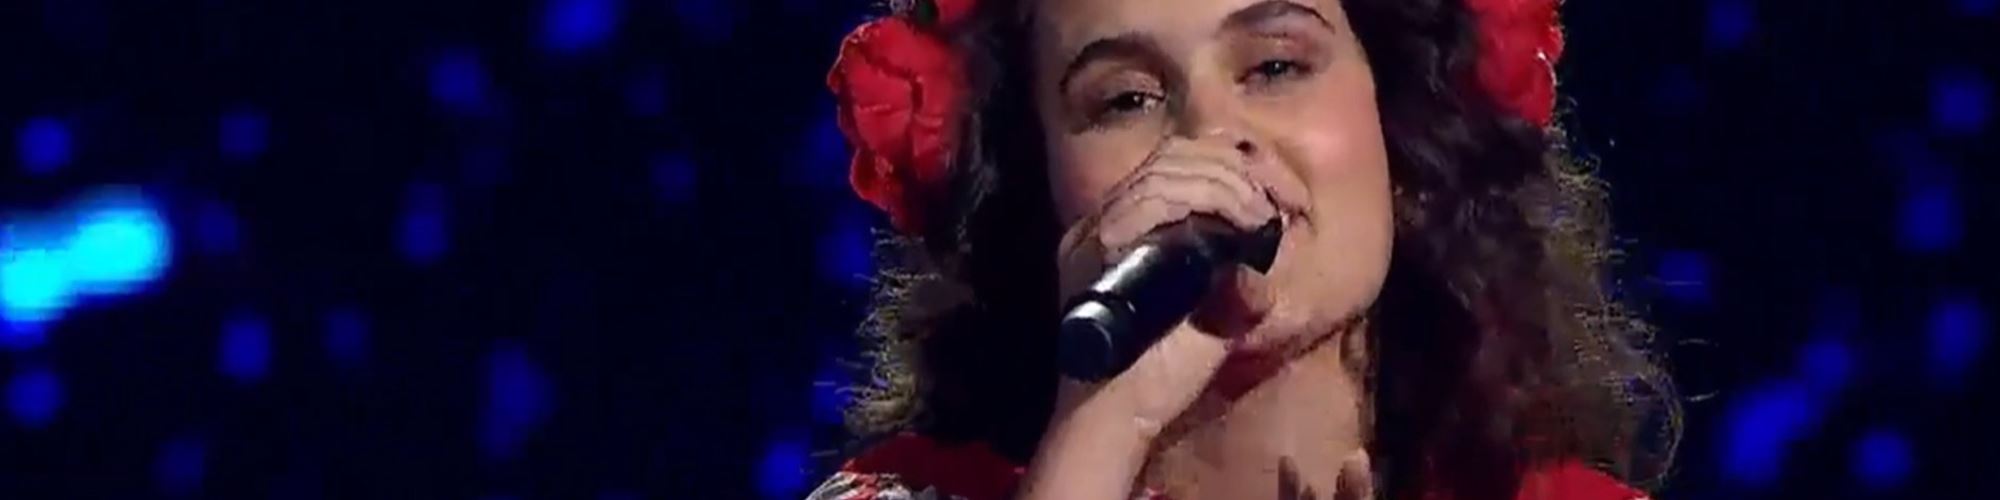 Concorrente ucraniana emociona no "The Voice Portugal"